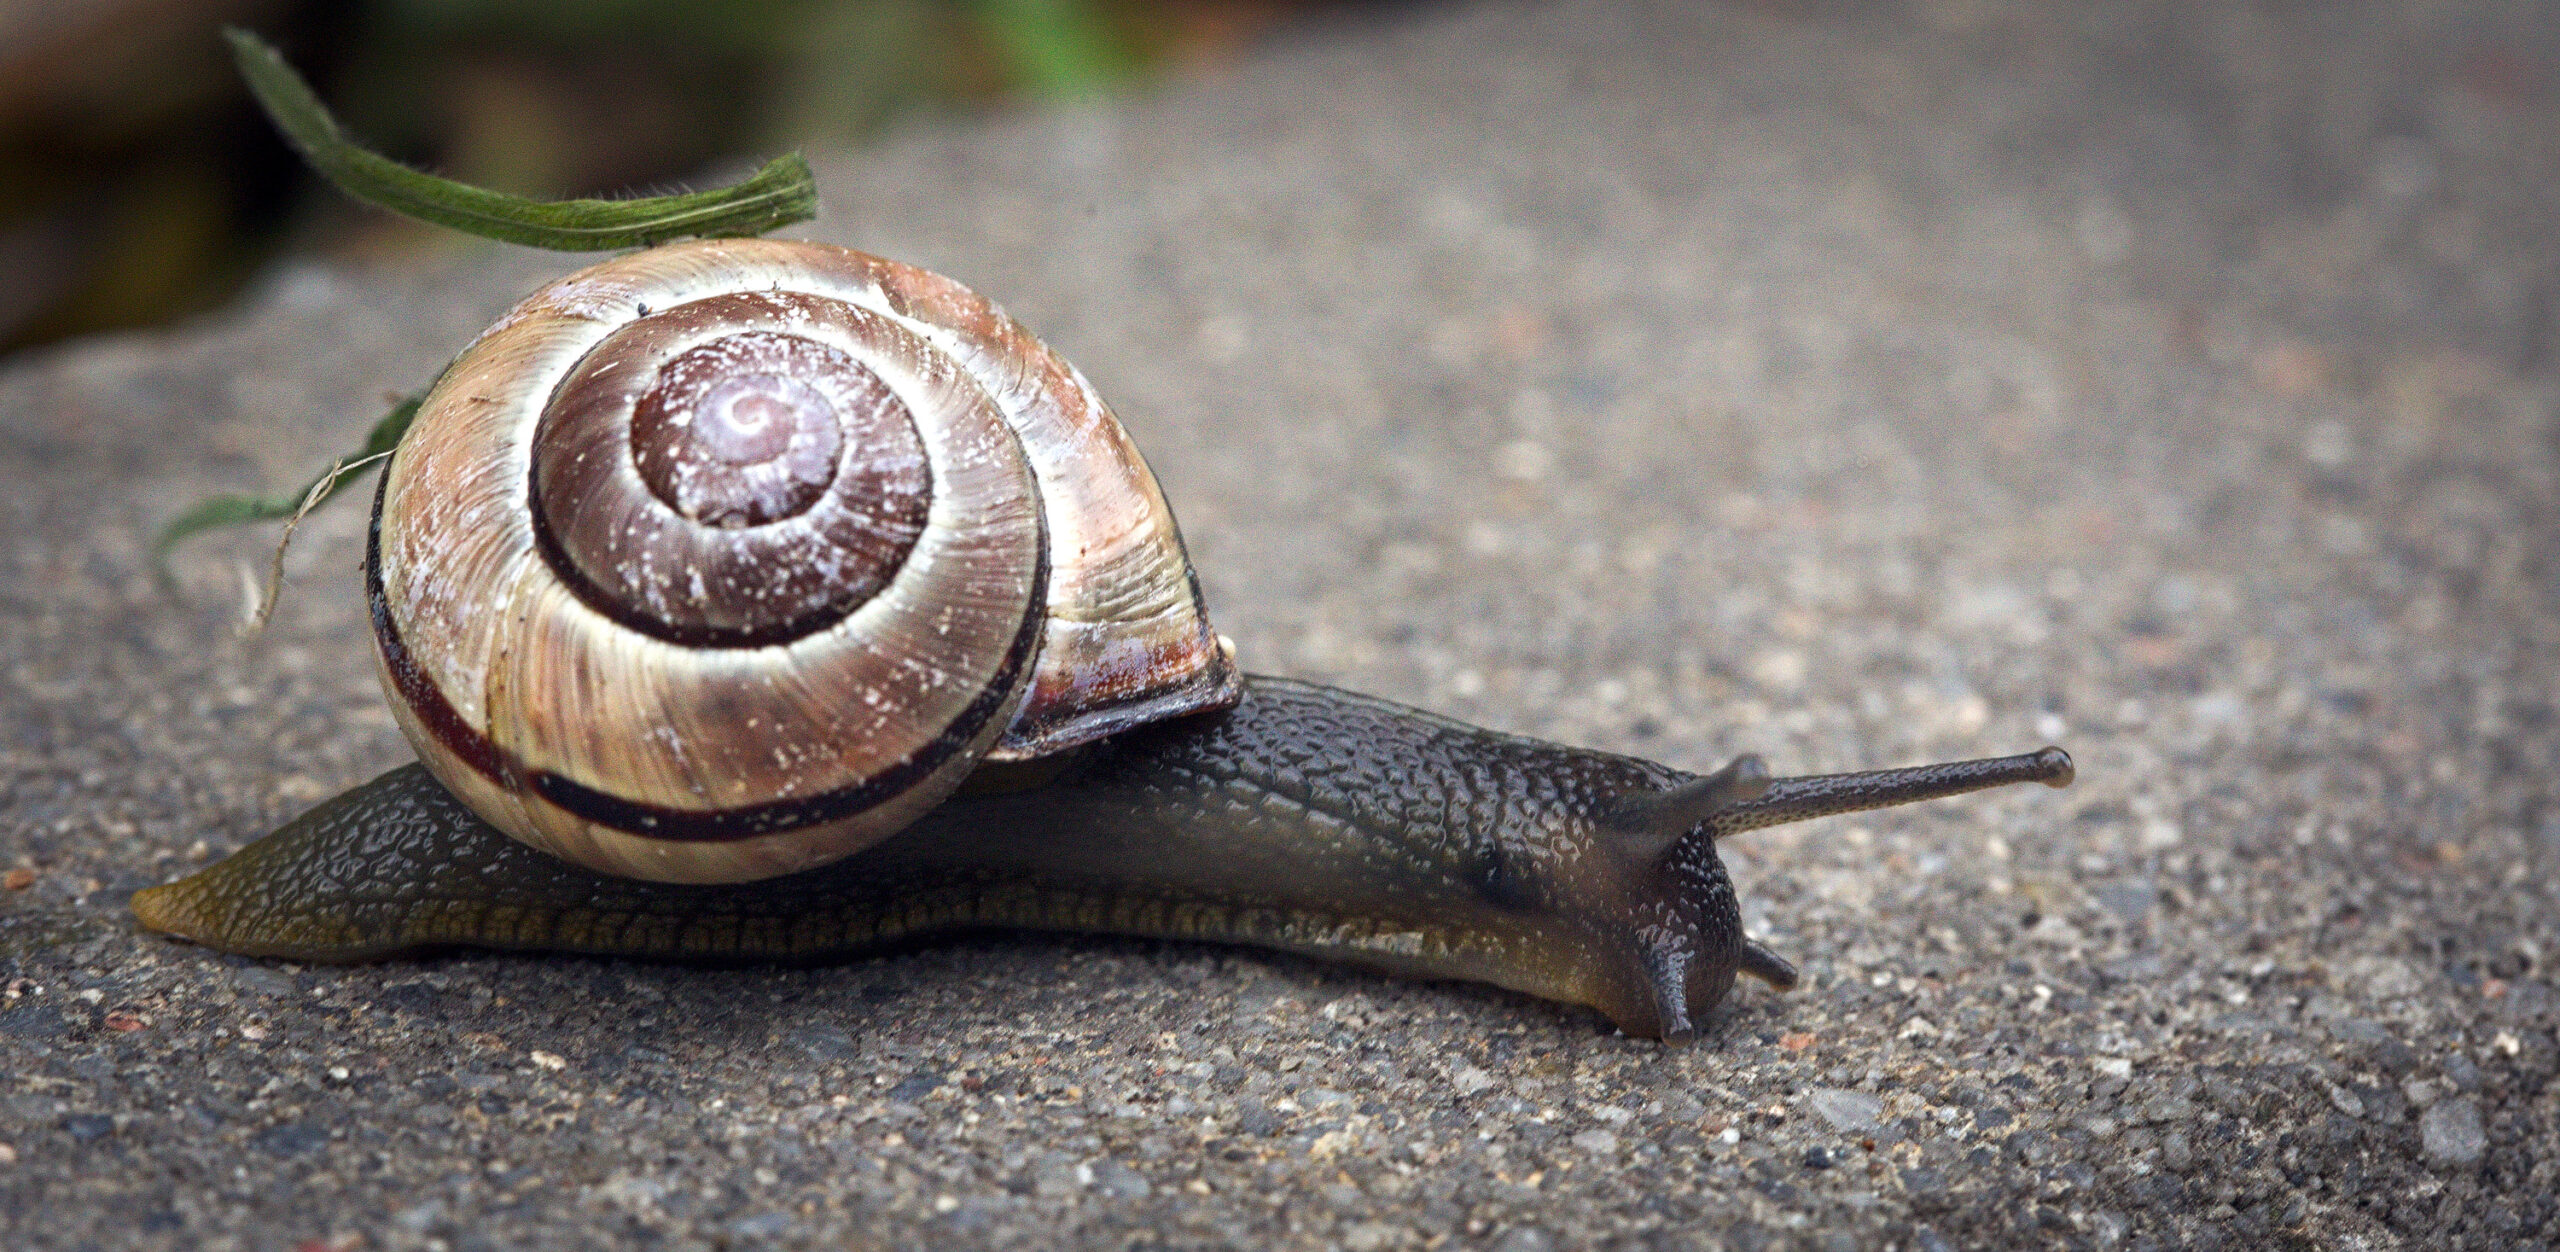 Brown-lipped snail travelling across a concrete pavement.